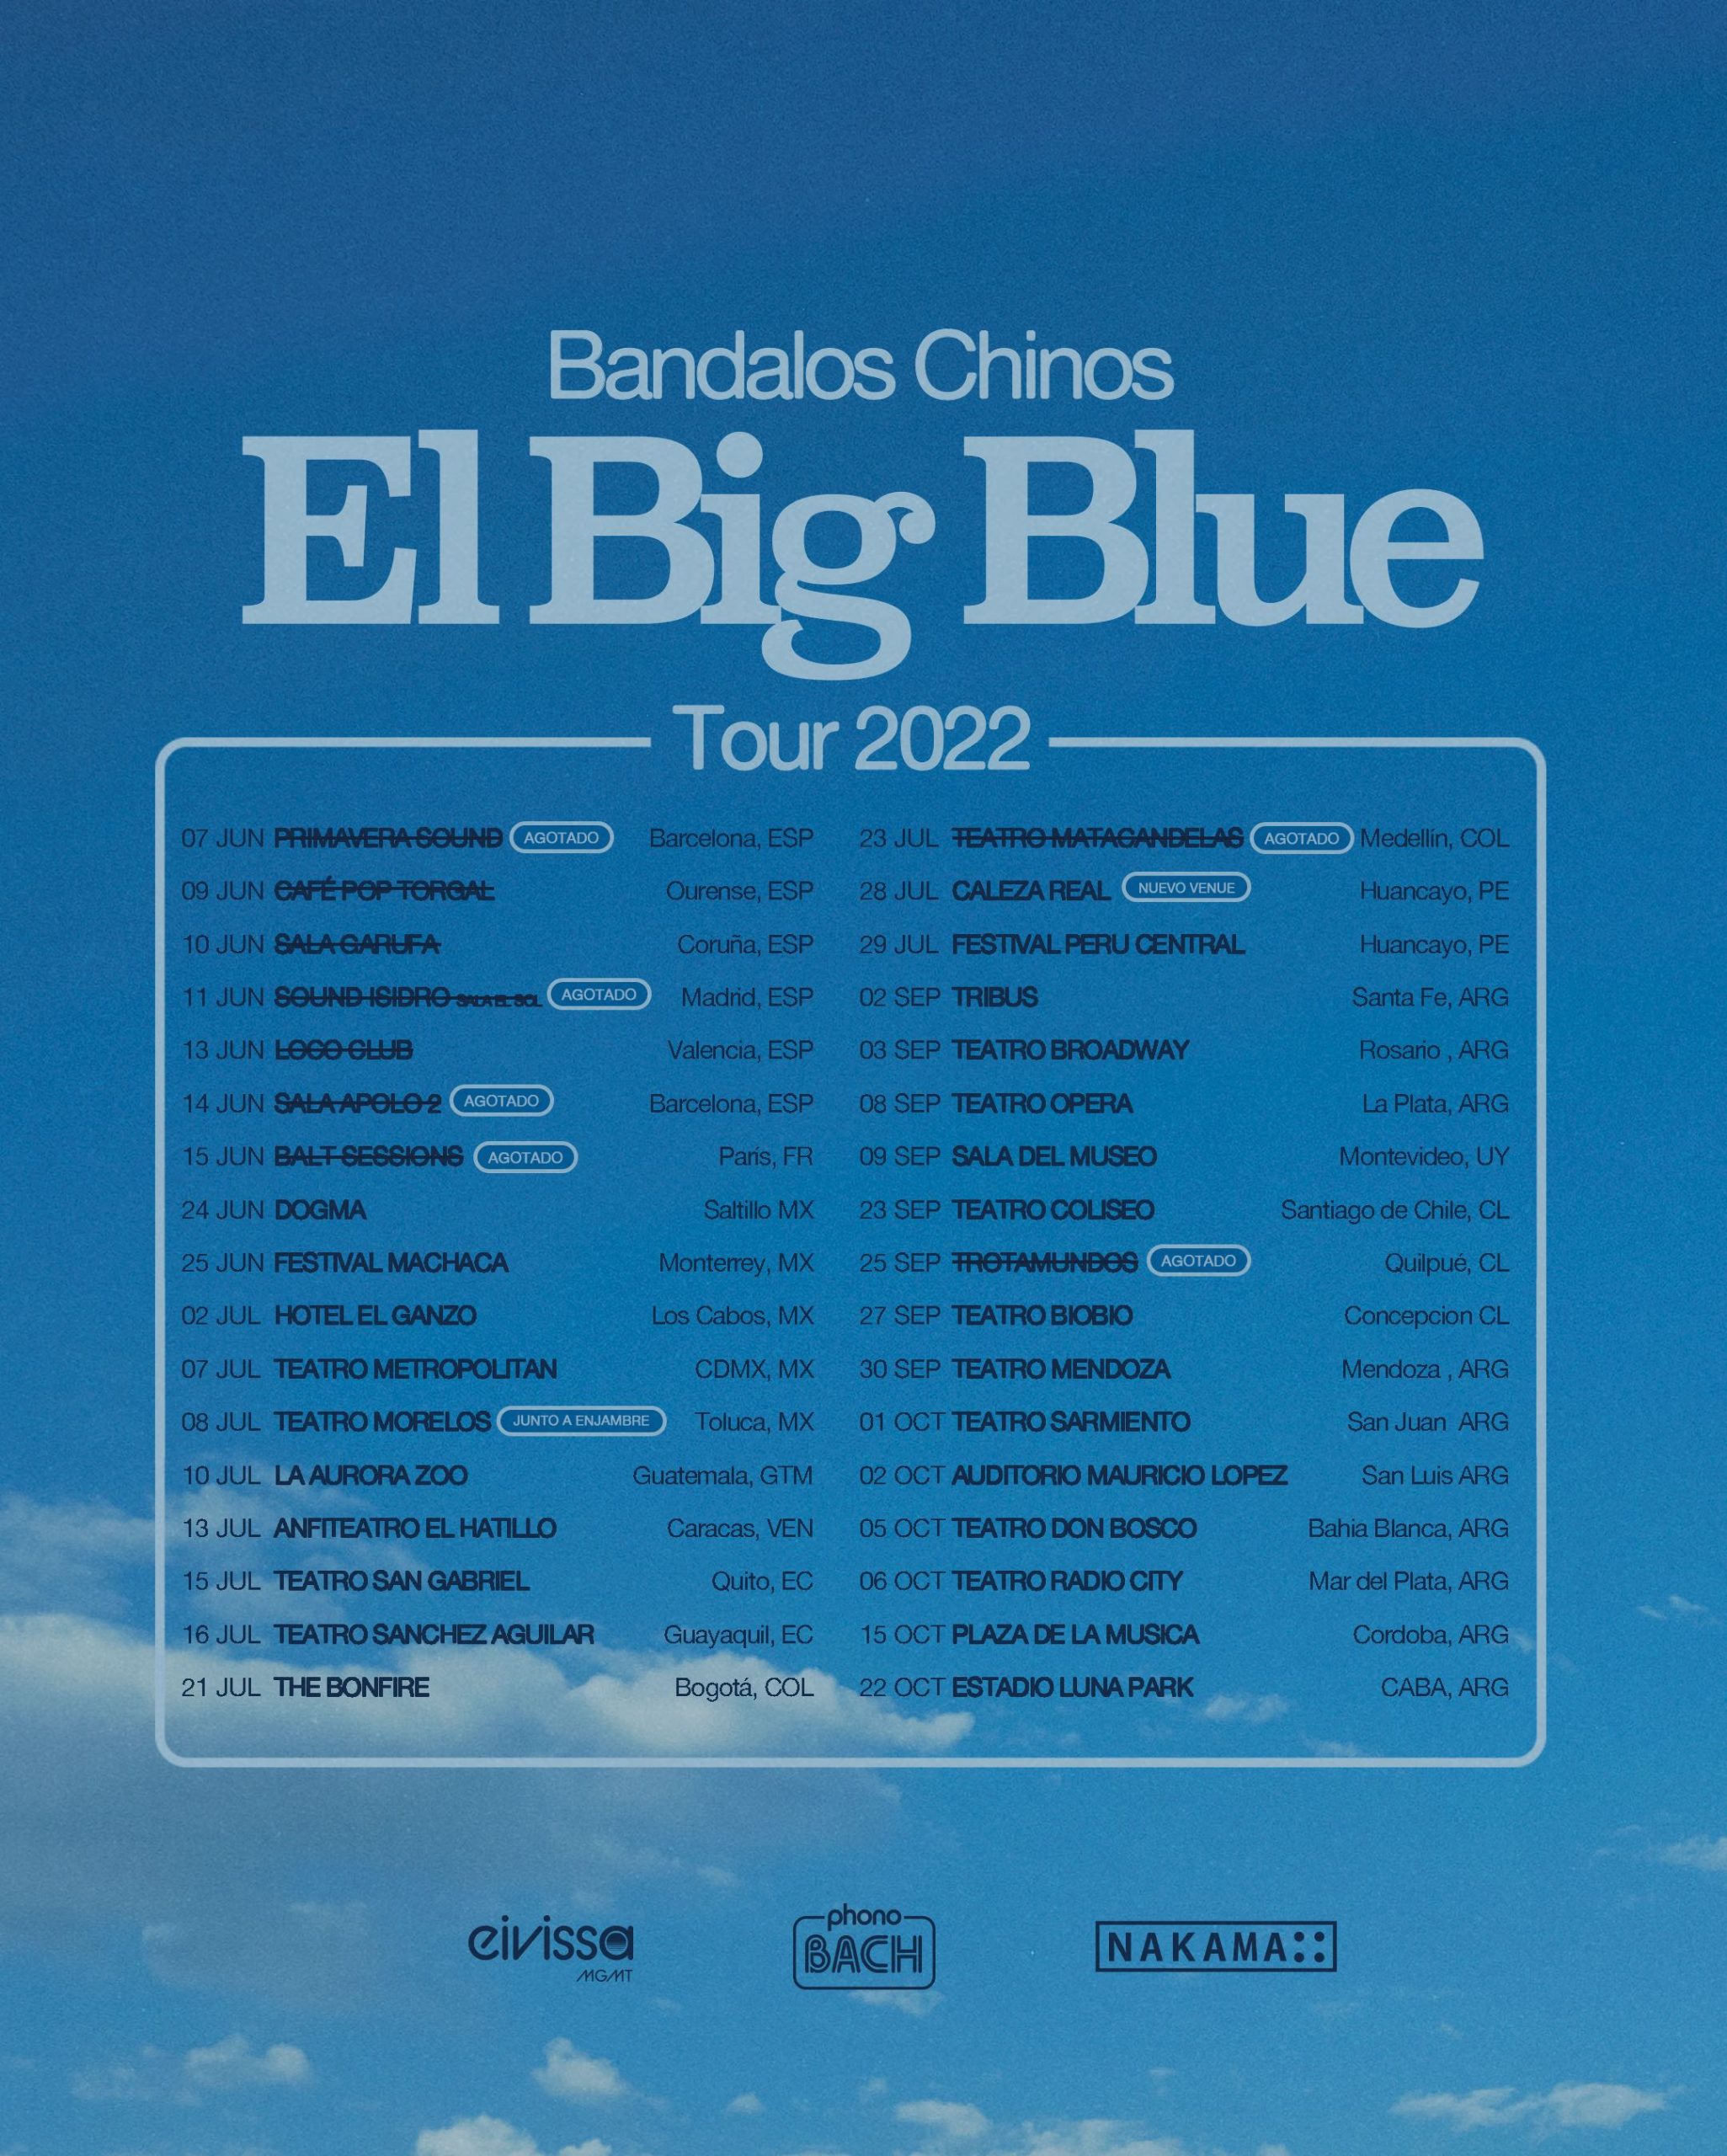 BANDALOS CHINOS El Big Blue Tour 2022